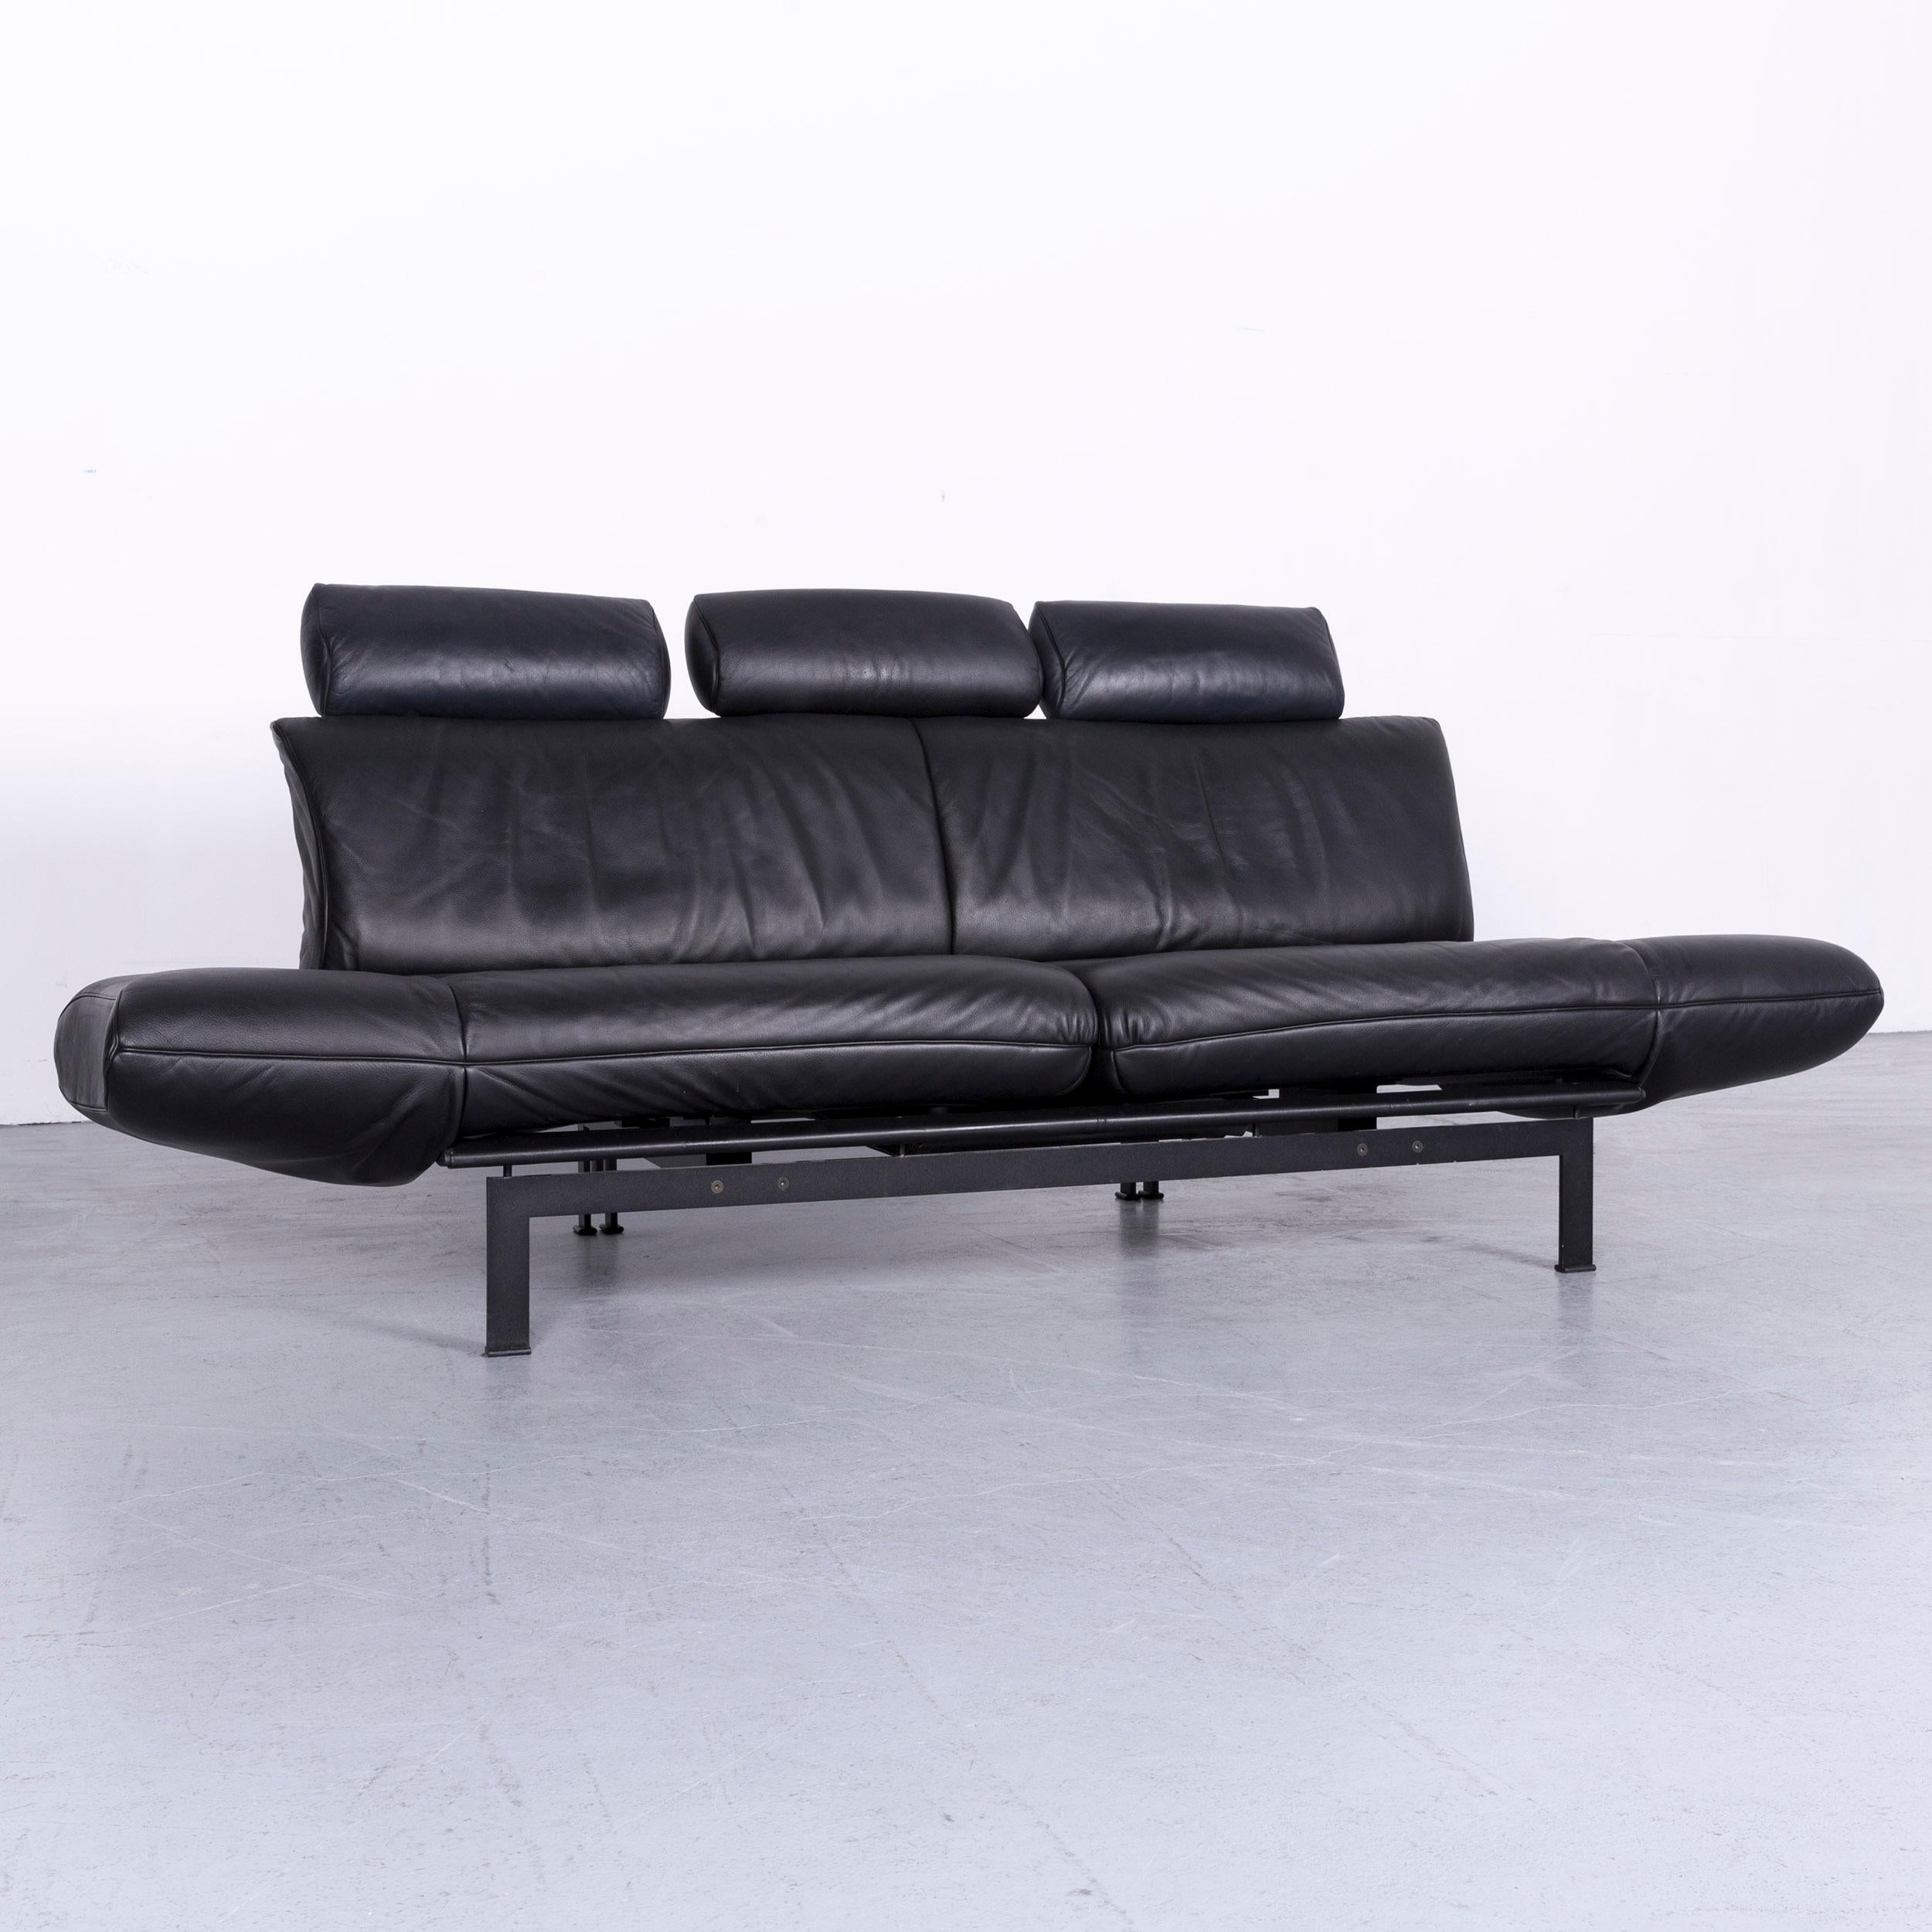 German De Sede Ds 140 Designer Leather Sofa Black Three-Seat Function Modern For Sale